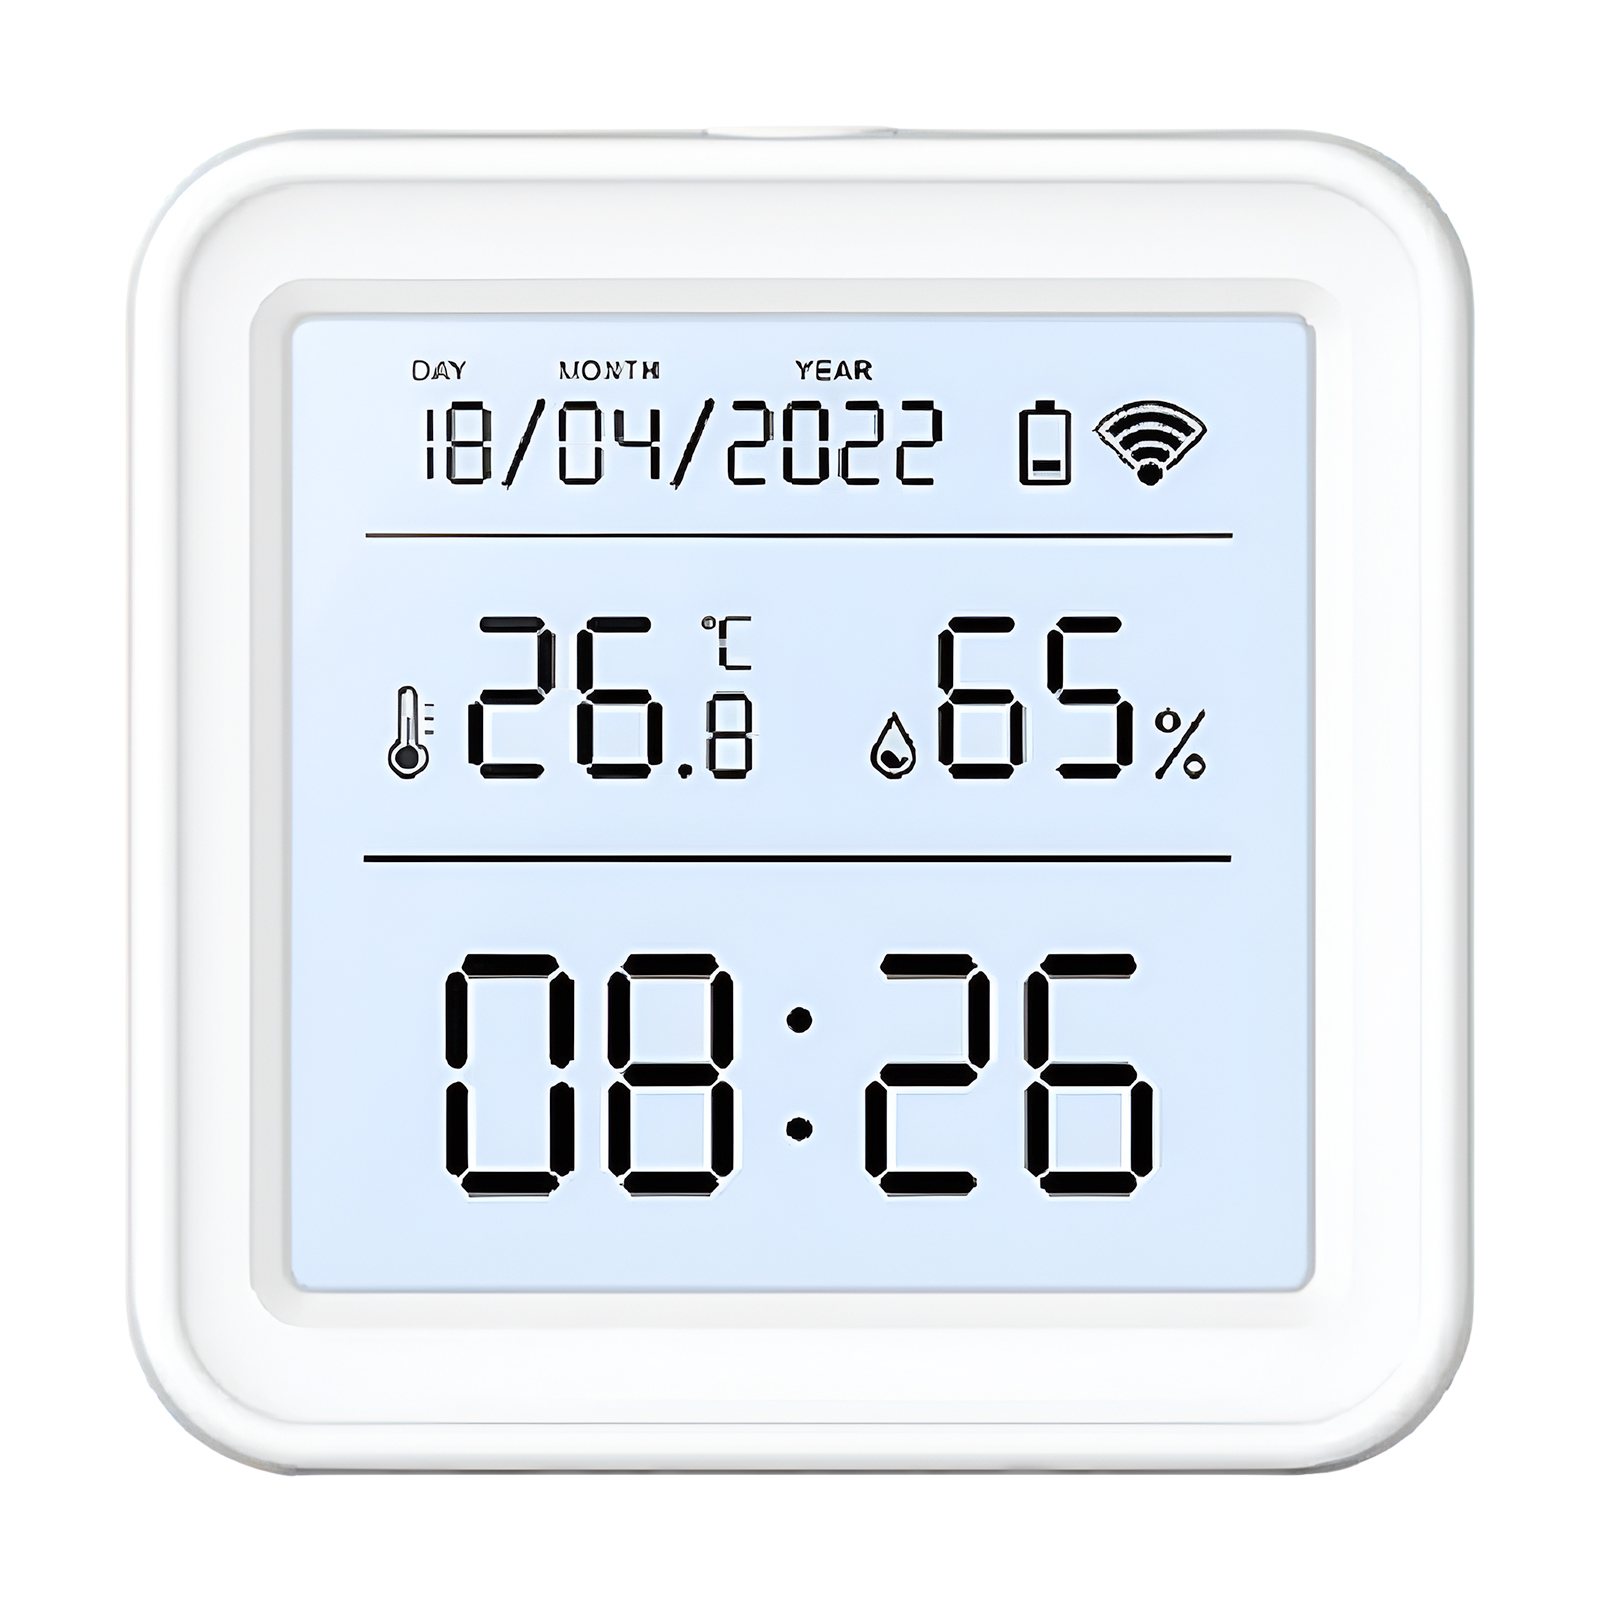 wifi temperature humidity sensor